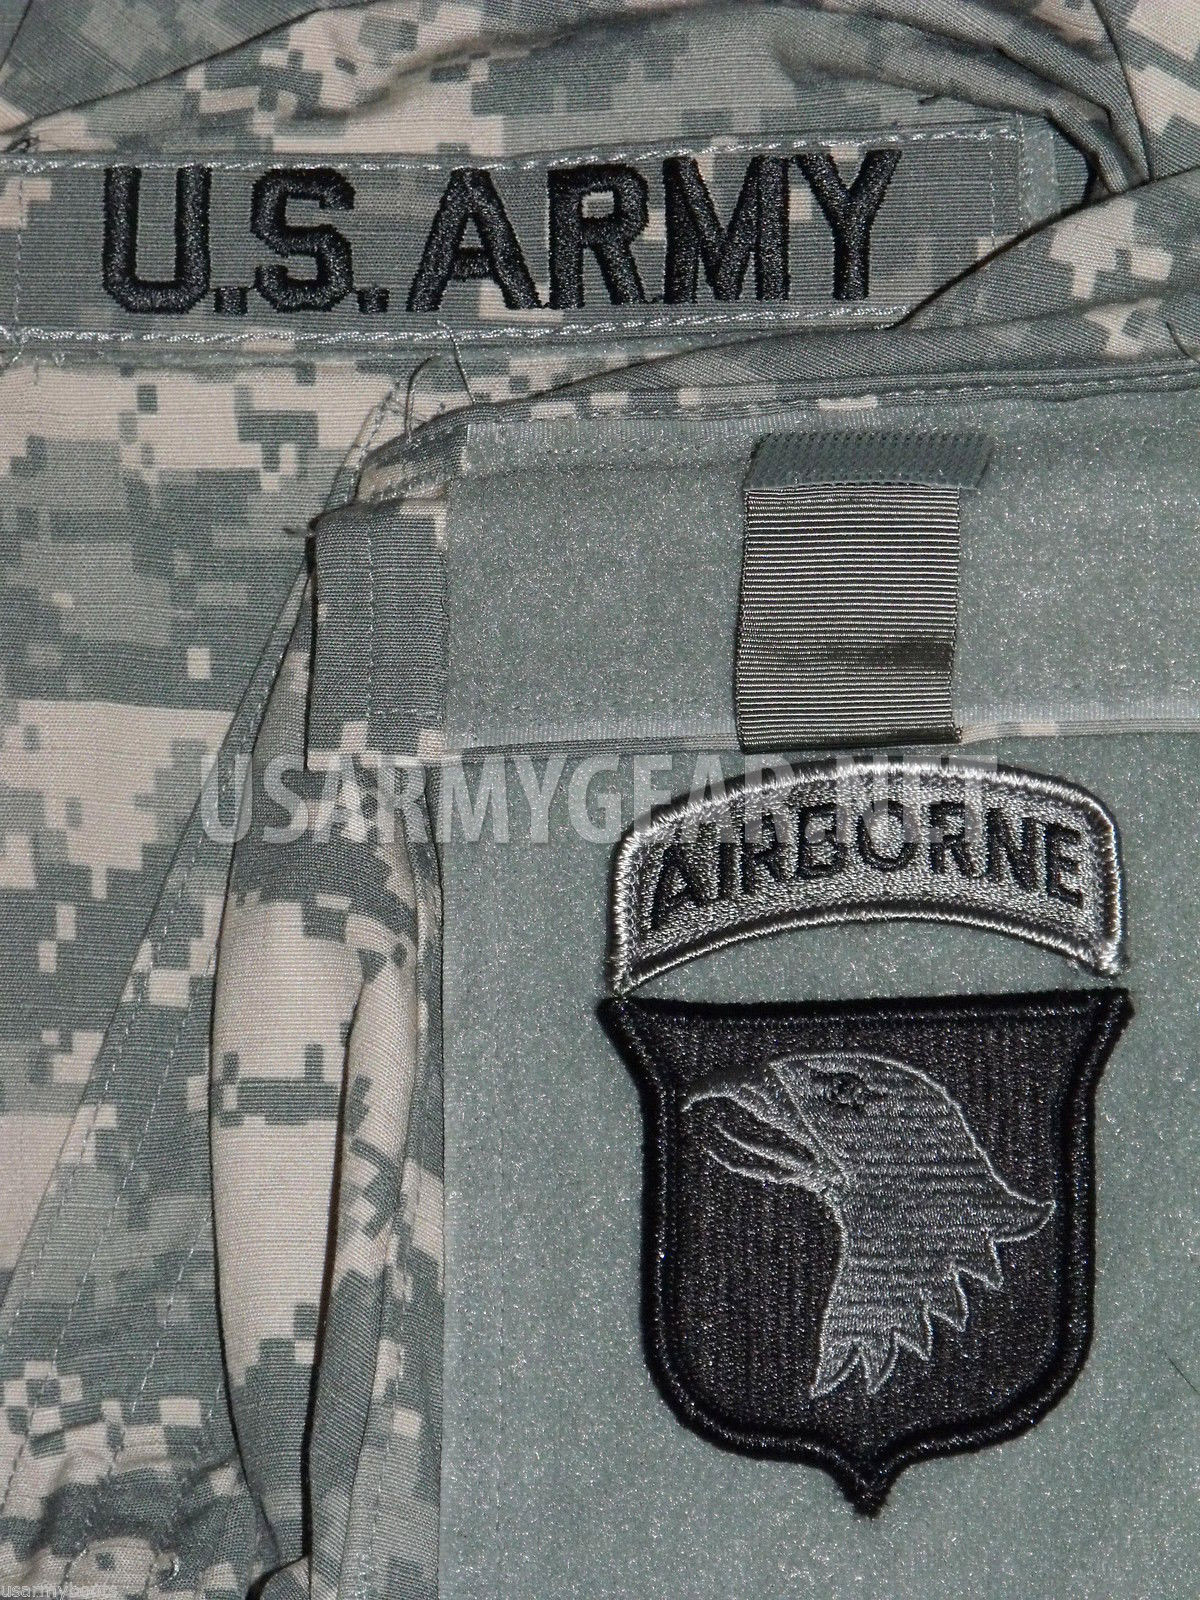 New 101st Airborne Division ACU Patch Set+ US.Army Tab-Uniform Shirt Jacket M 65